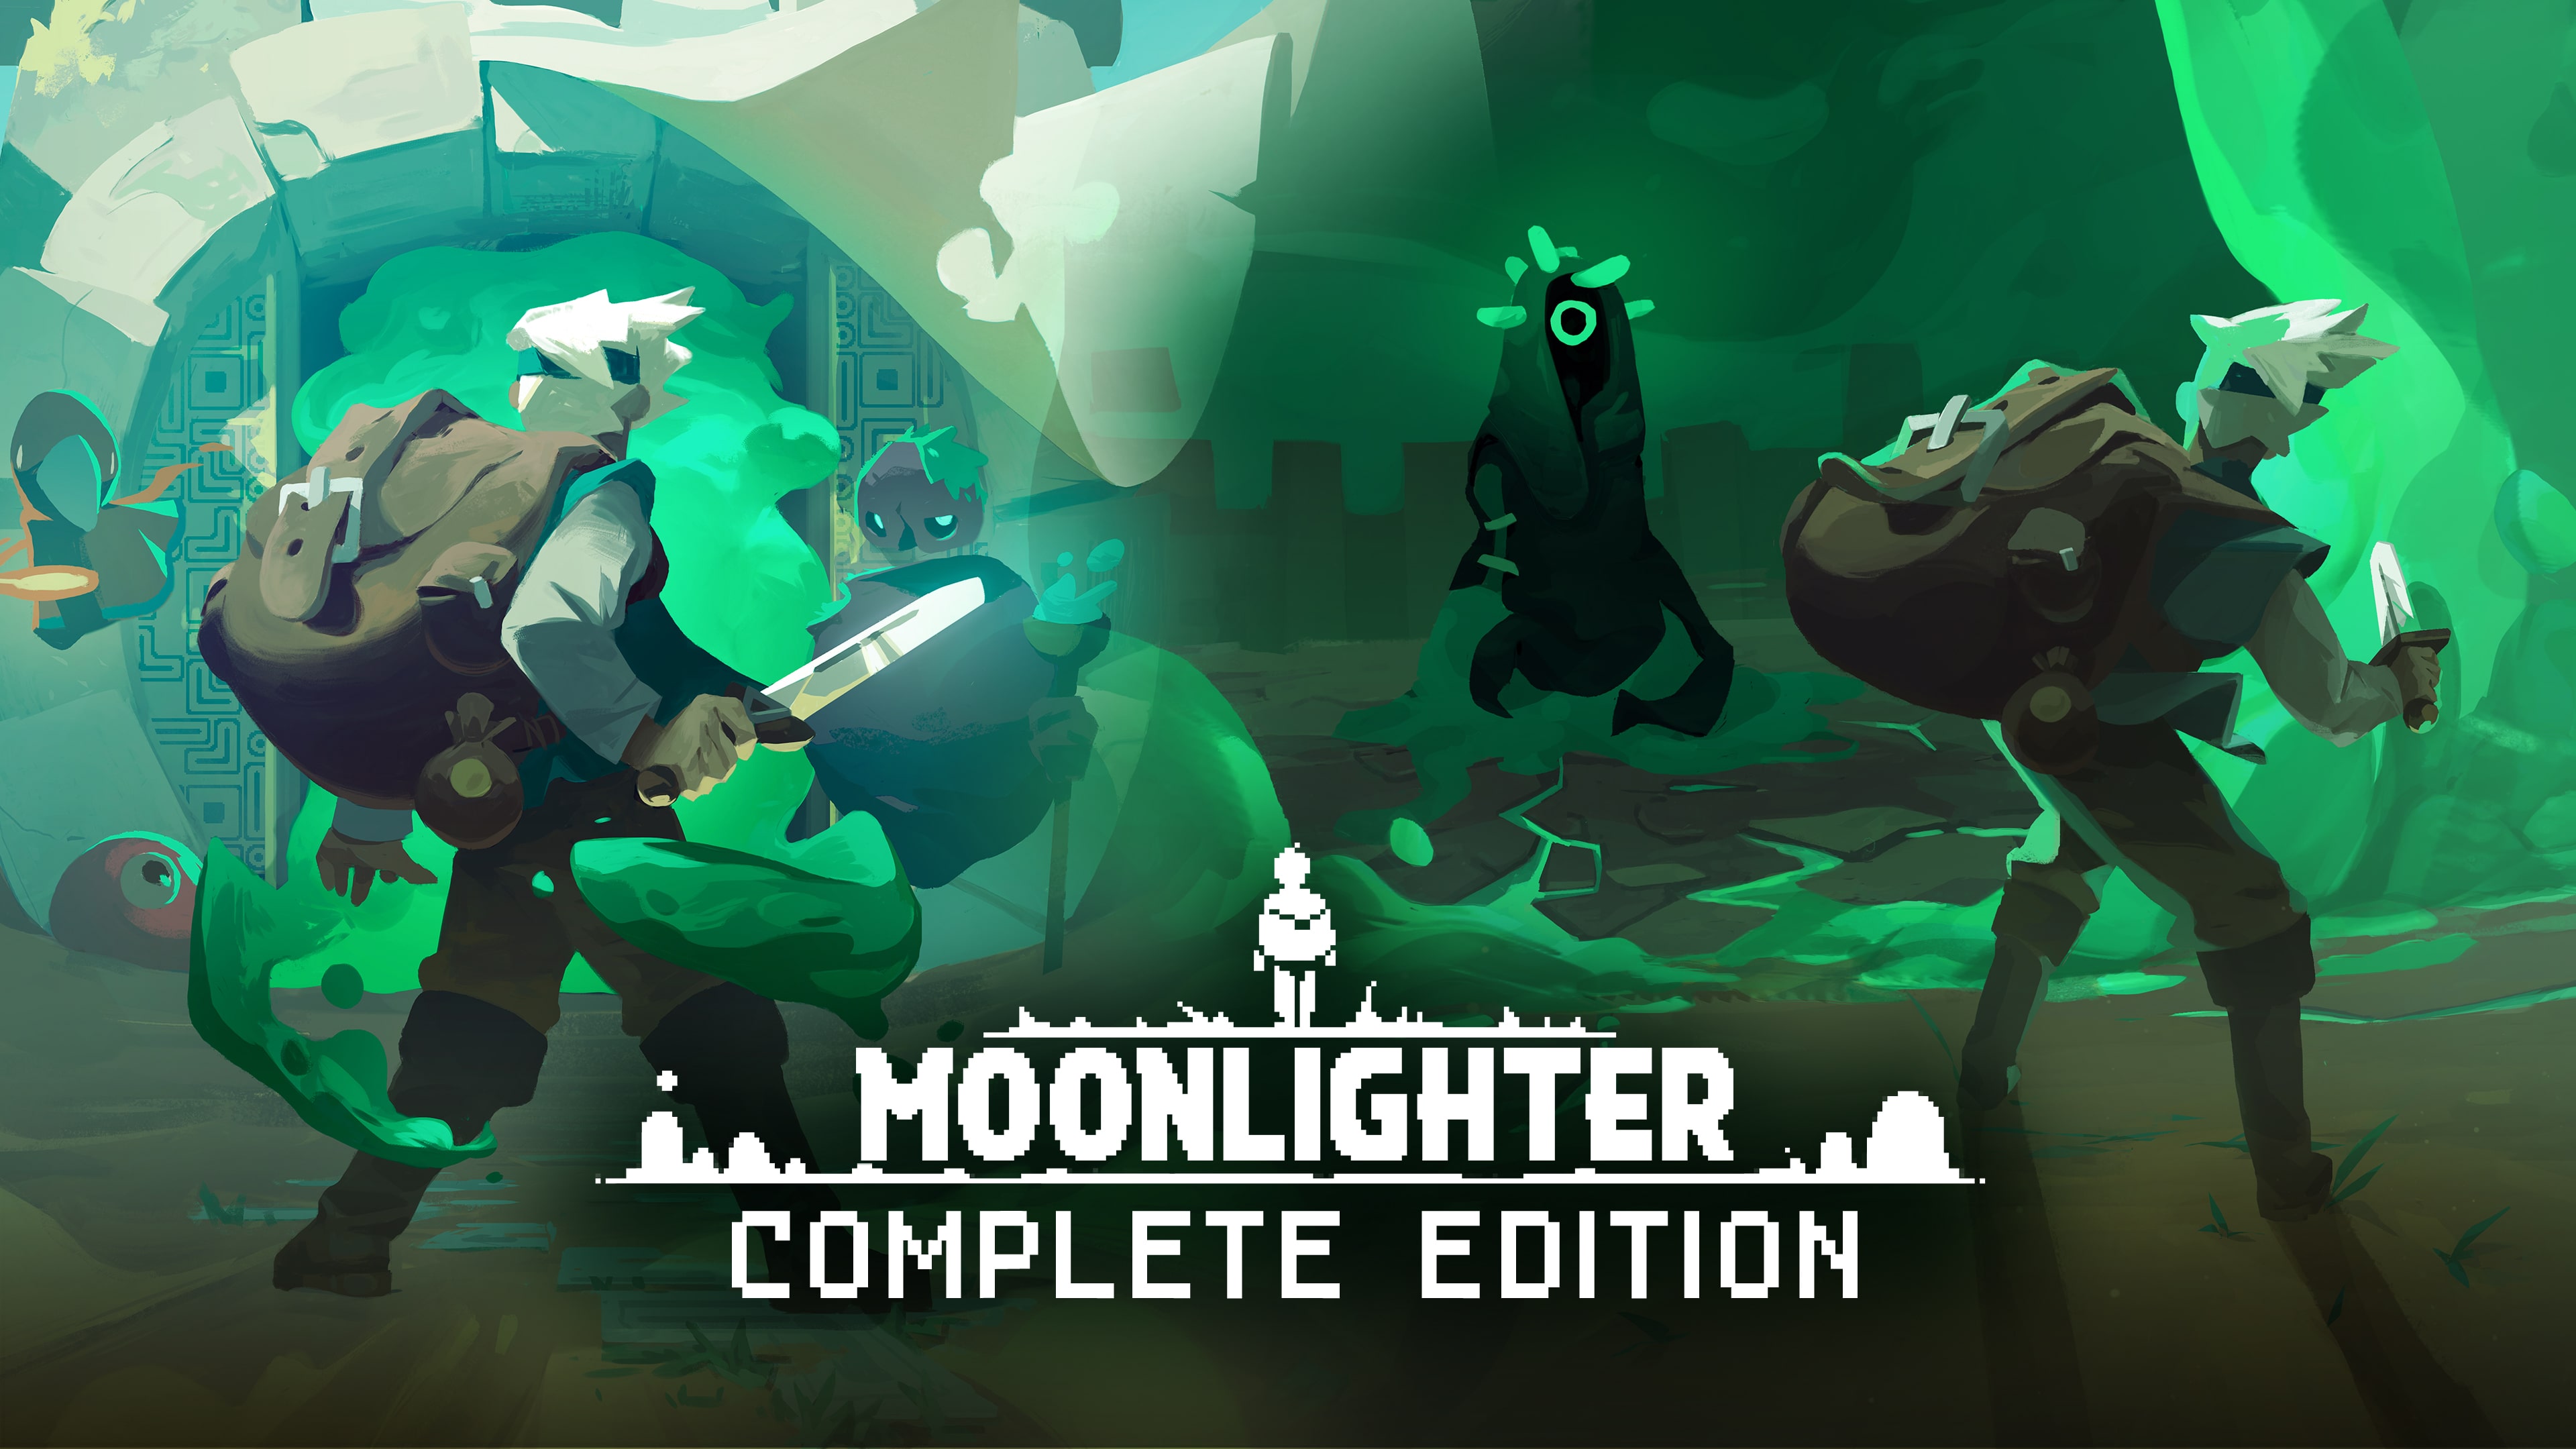 download moonlighter complete edition